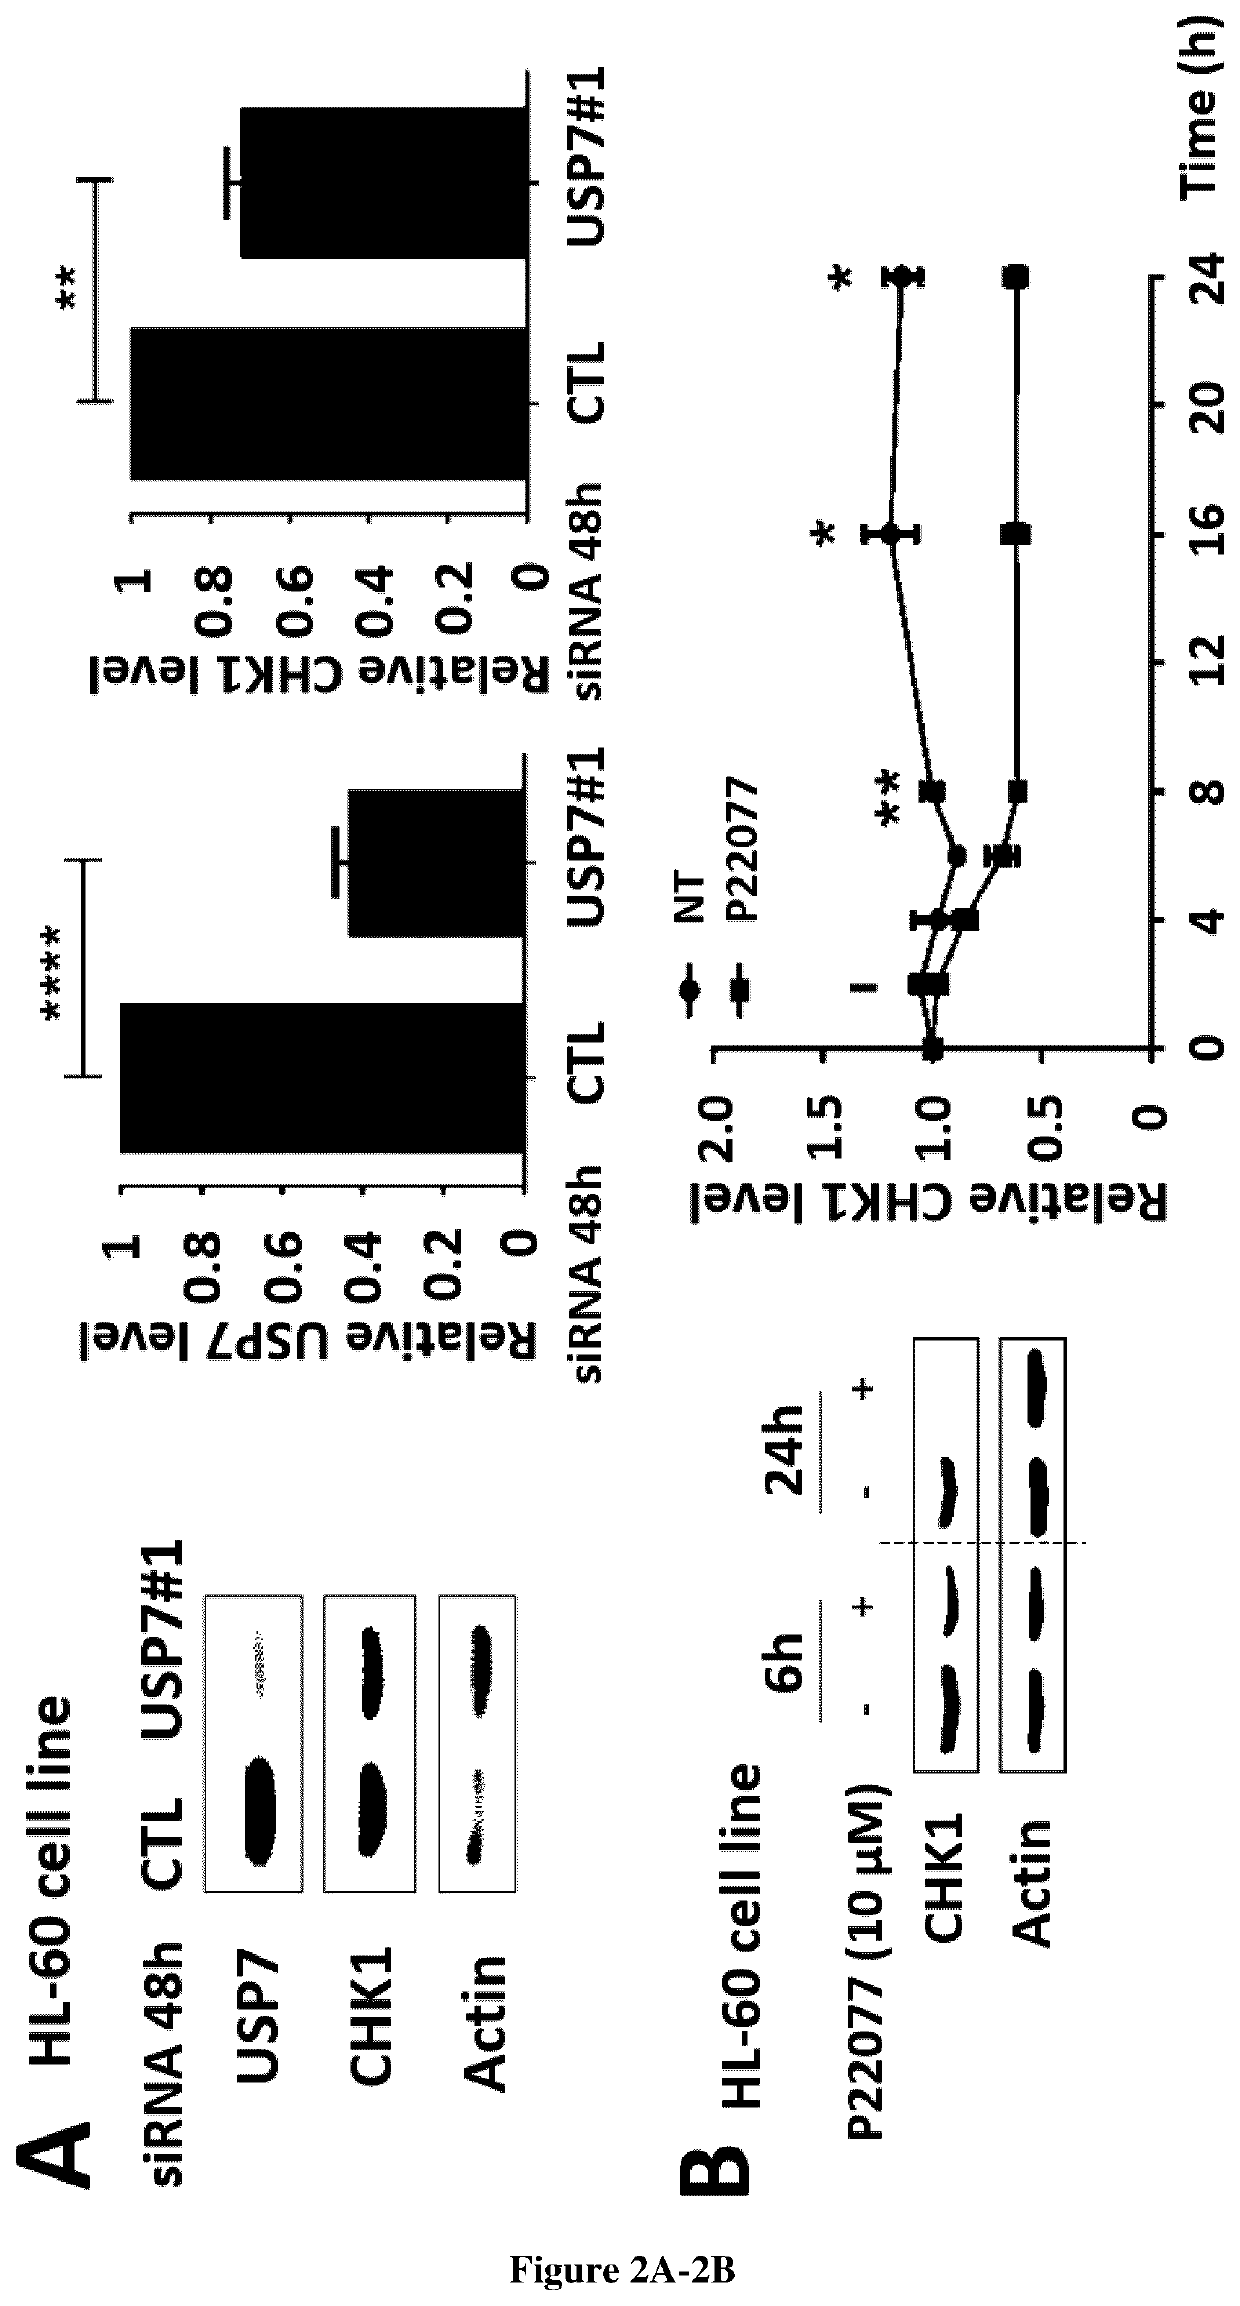 Use of usp7 inhibitors for the treatment of acute myeloid leukemia (AML)